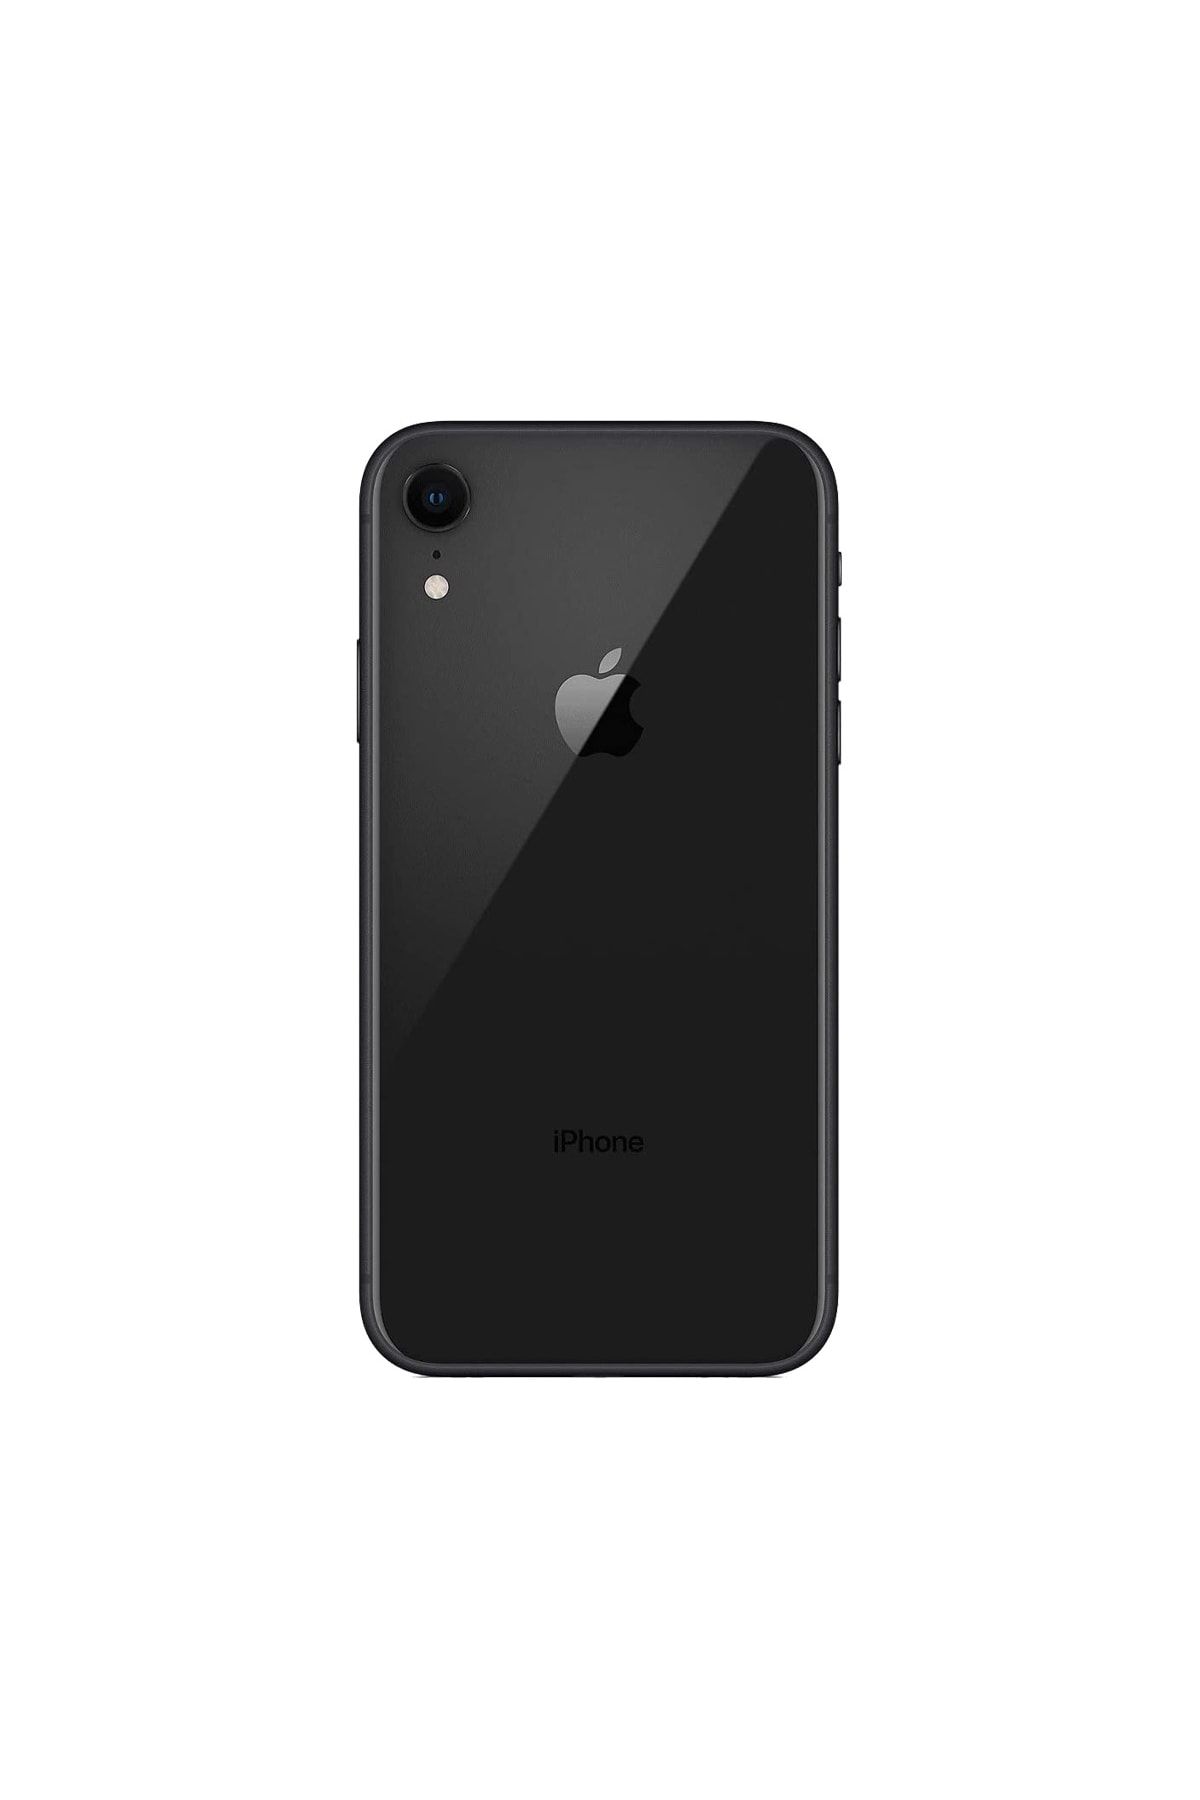 Apple Yenilenmiş iPhone Xr 64 GB Siyah Cep Telefonu (12 Ay Garantili) - C Kalite